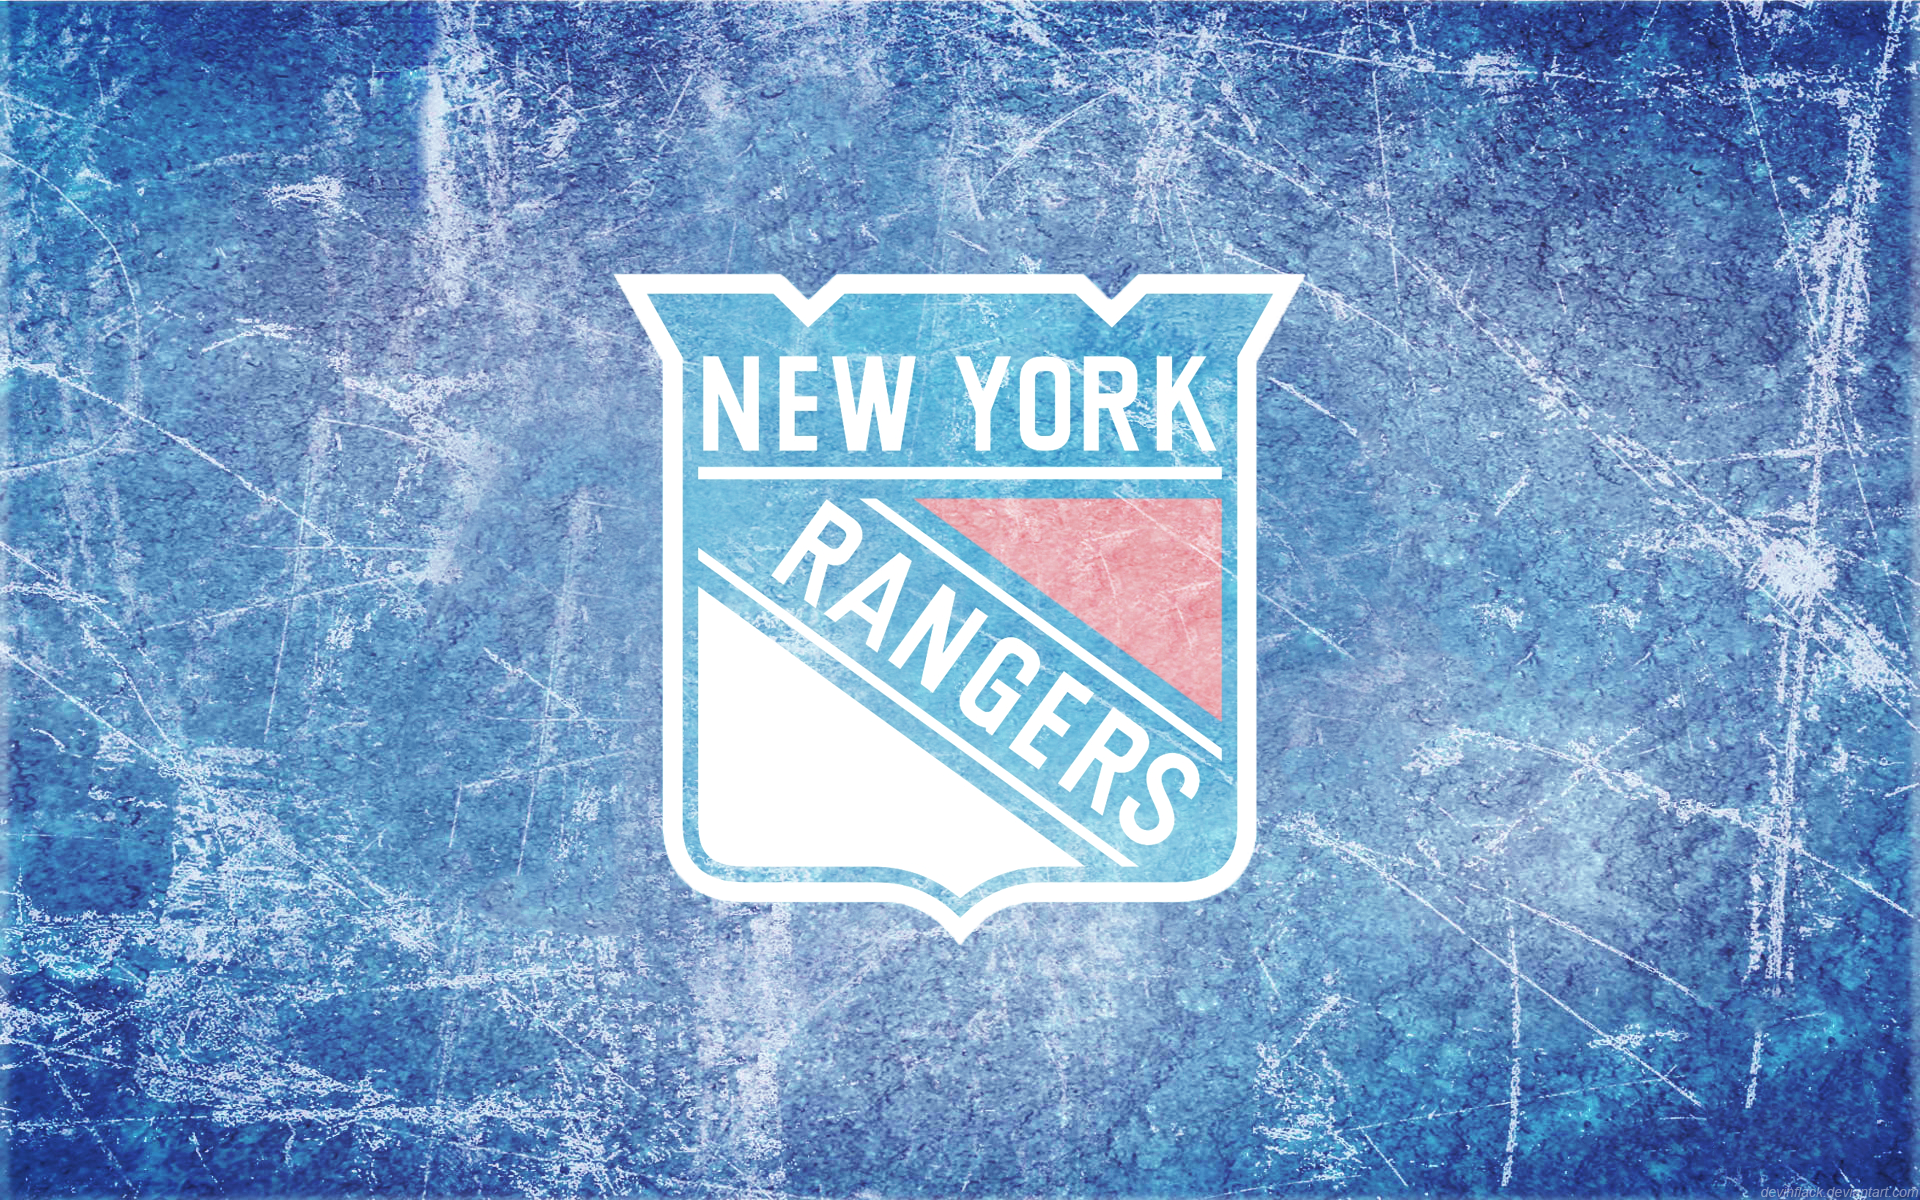 New York Rangers wallpaper 1920x1200 54080